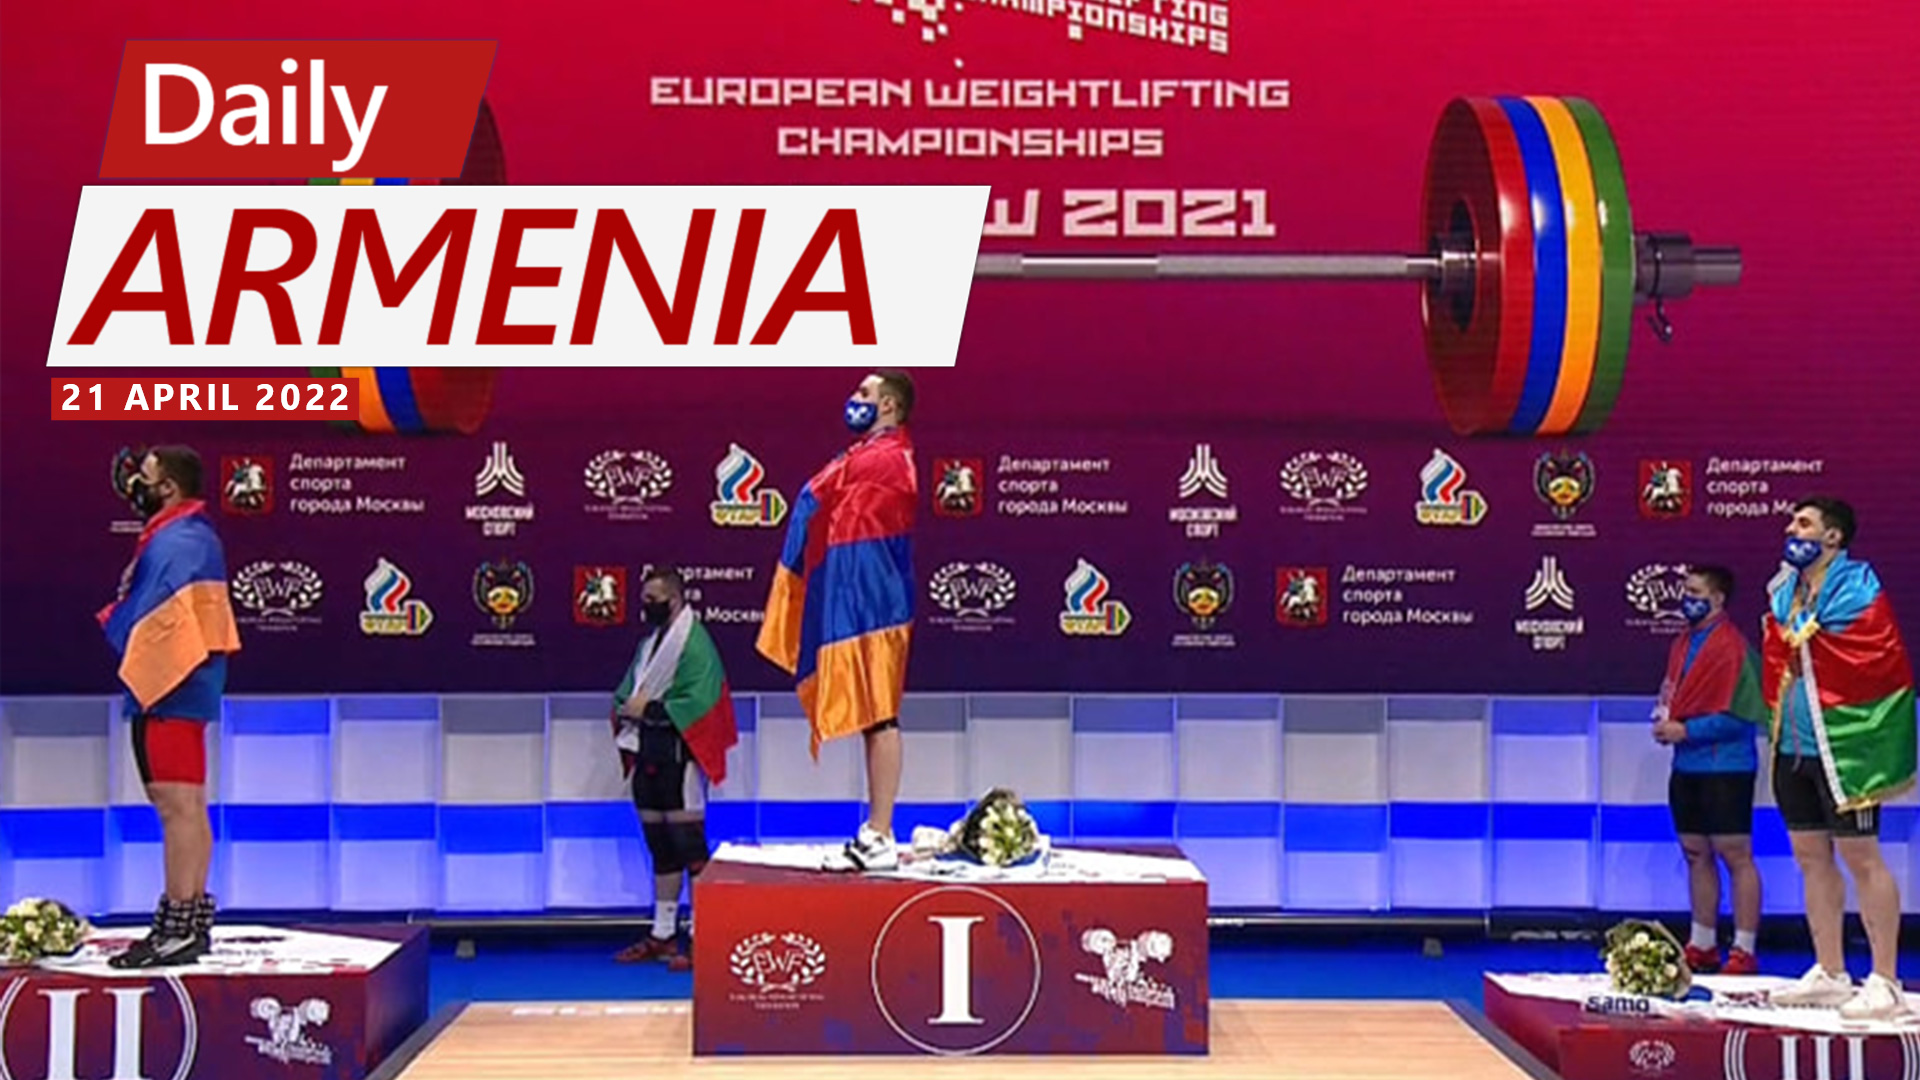 2023 European Weightlifting Championships to be held in Yerevan